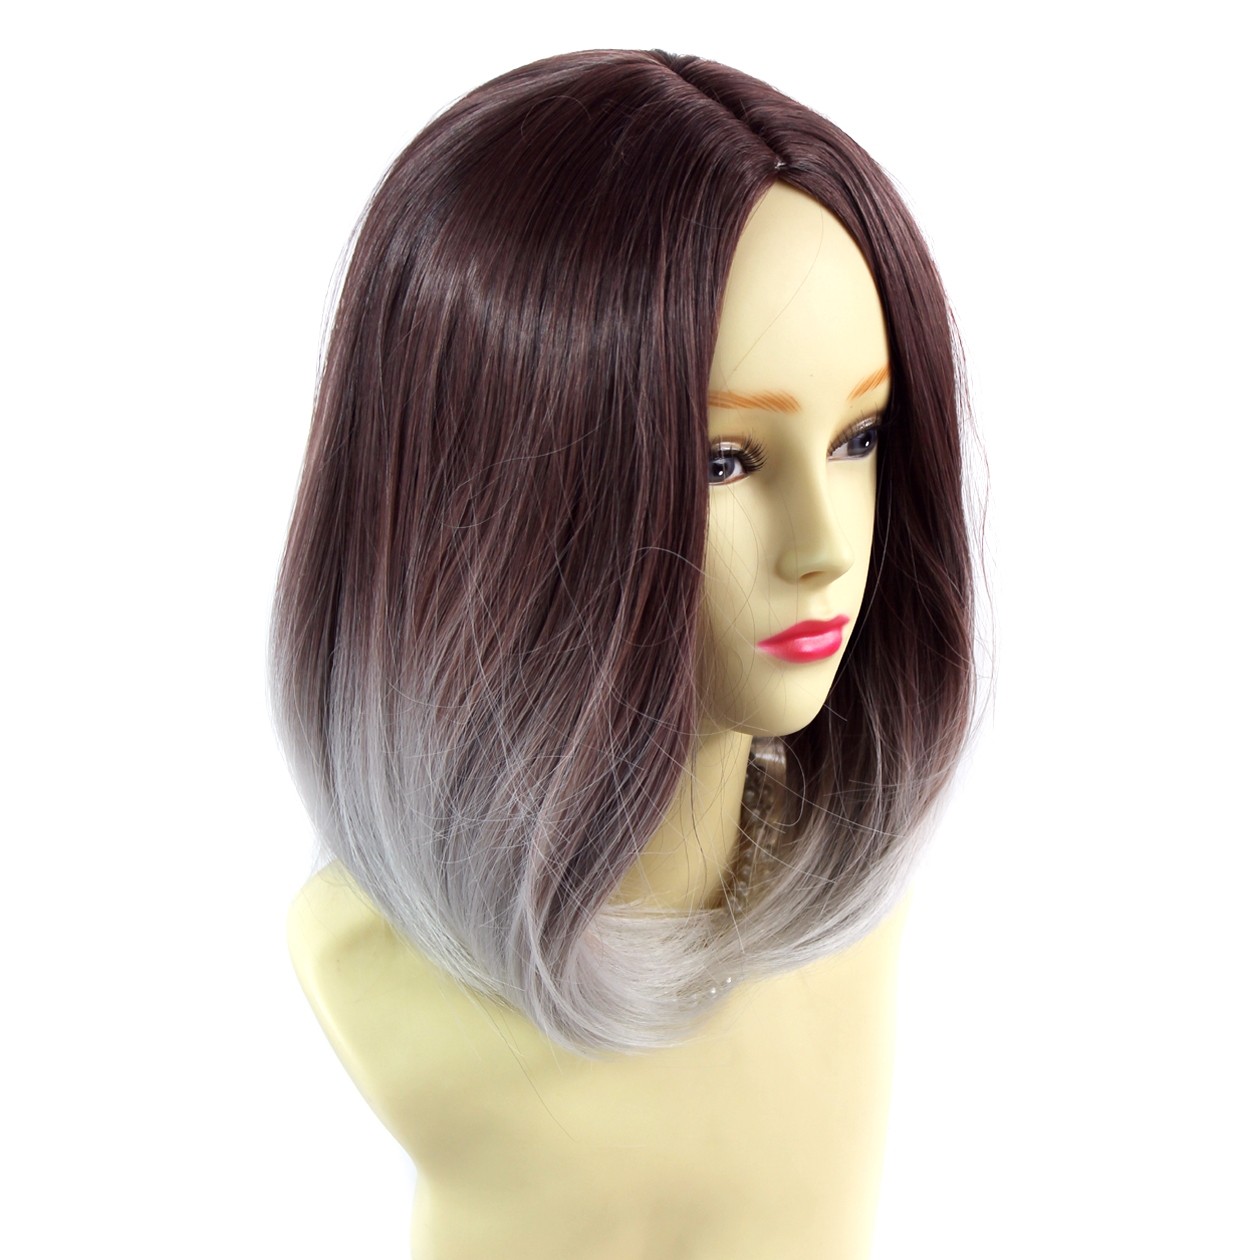 Wiwigs - Wiwigs ® Wonderful Medium Bob Style Wig Grey & Dark Auburn Dip-Dye  Ombre Hair UK